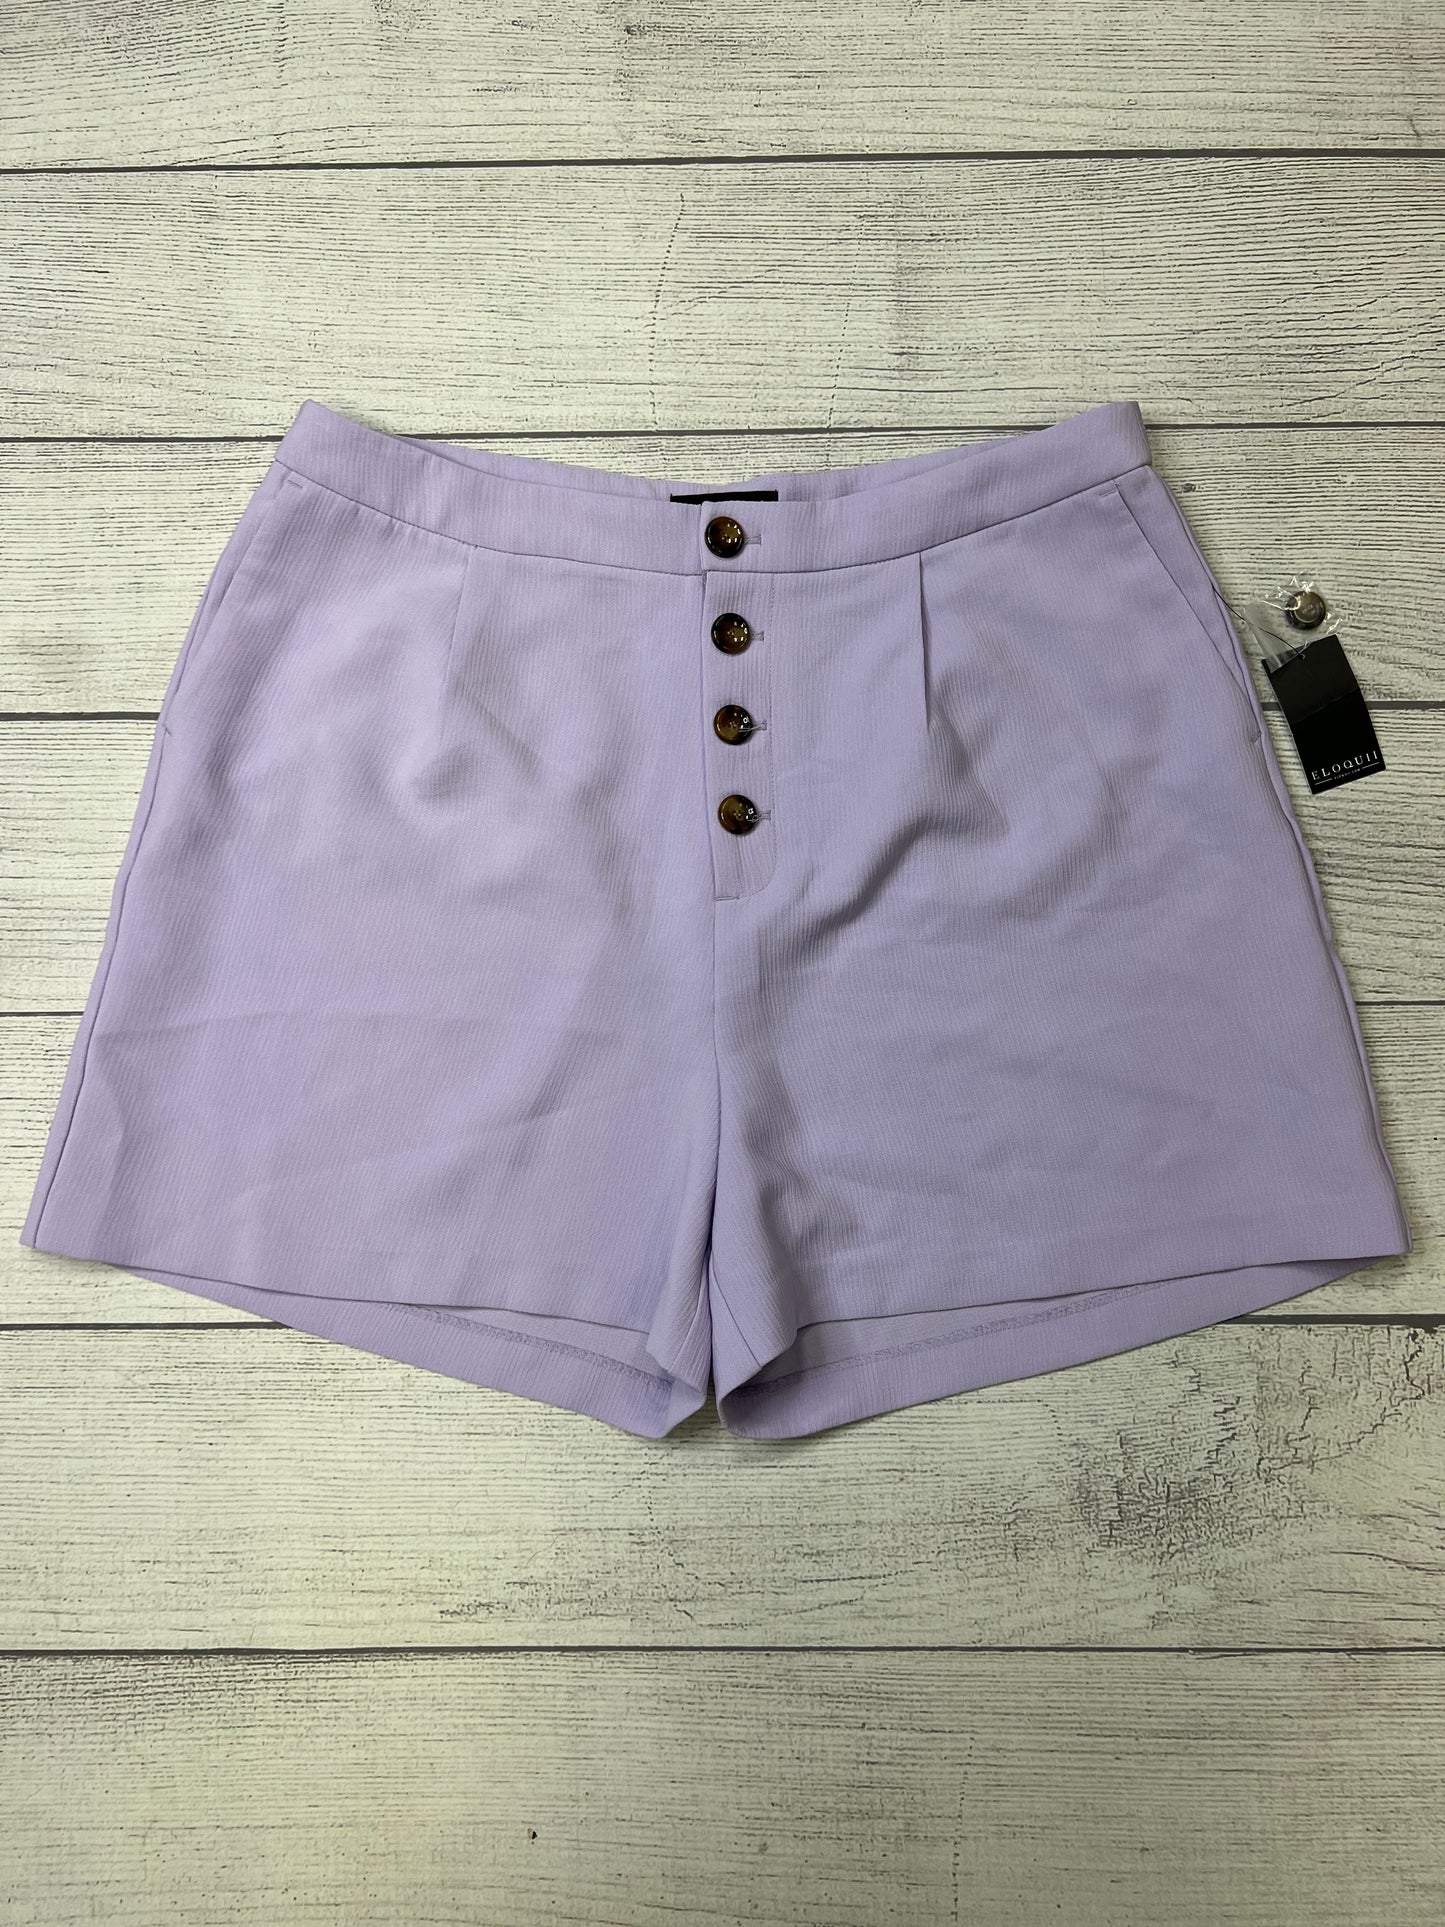 Purple Shorts Eloquii, Size 18